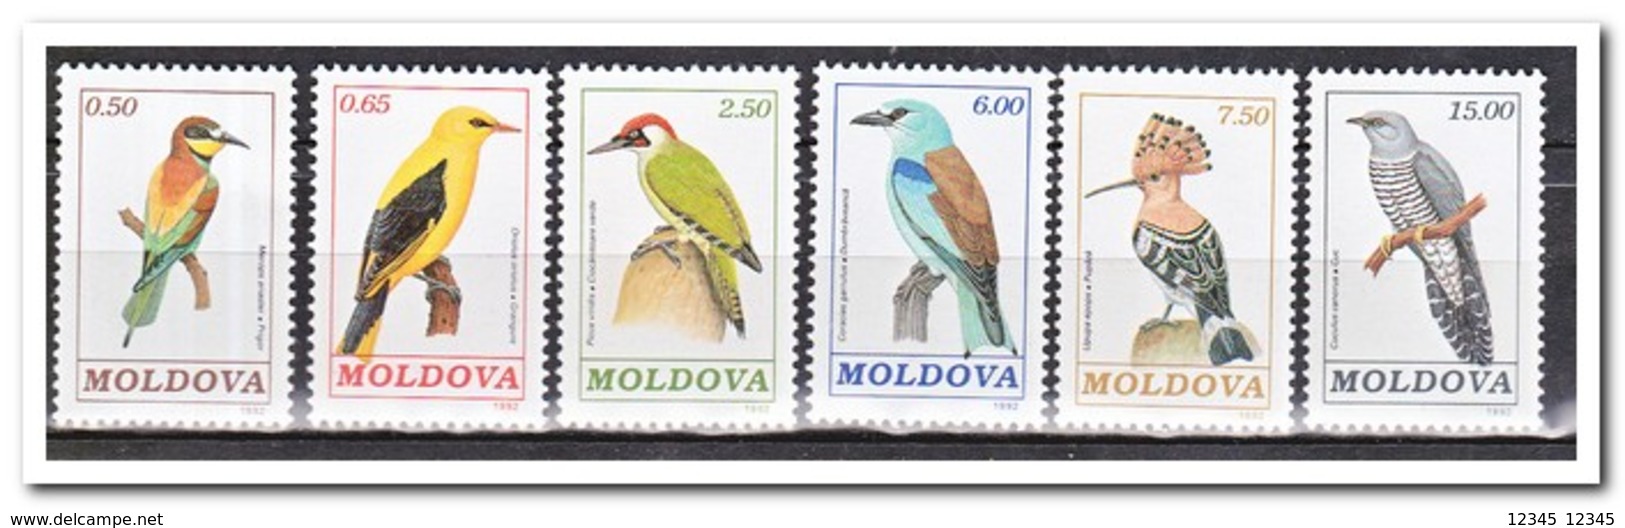 Moldavië 1992, Postfris MNH, Birds - Moldavië